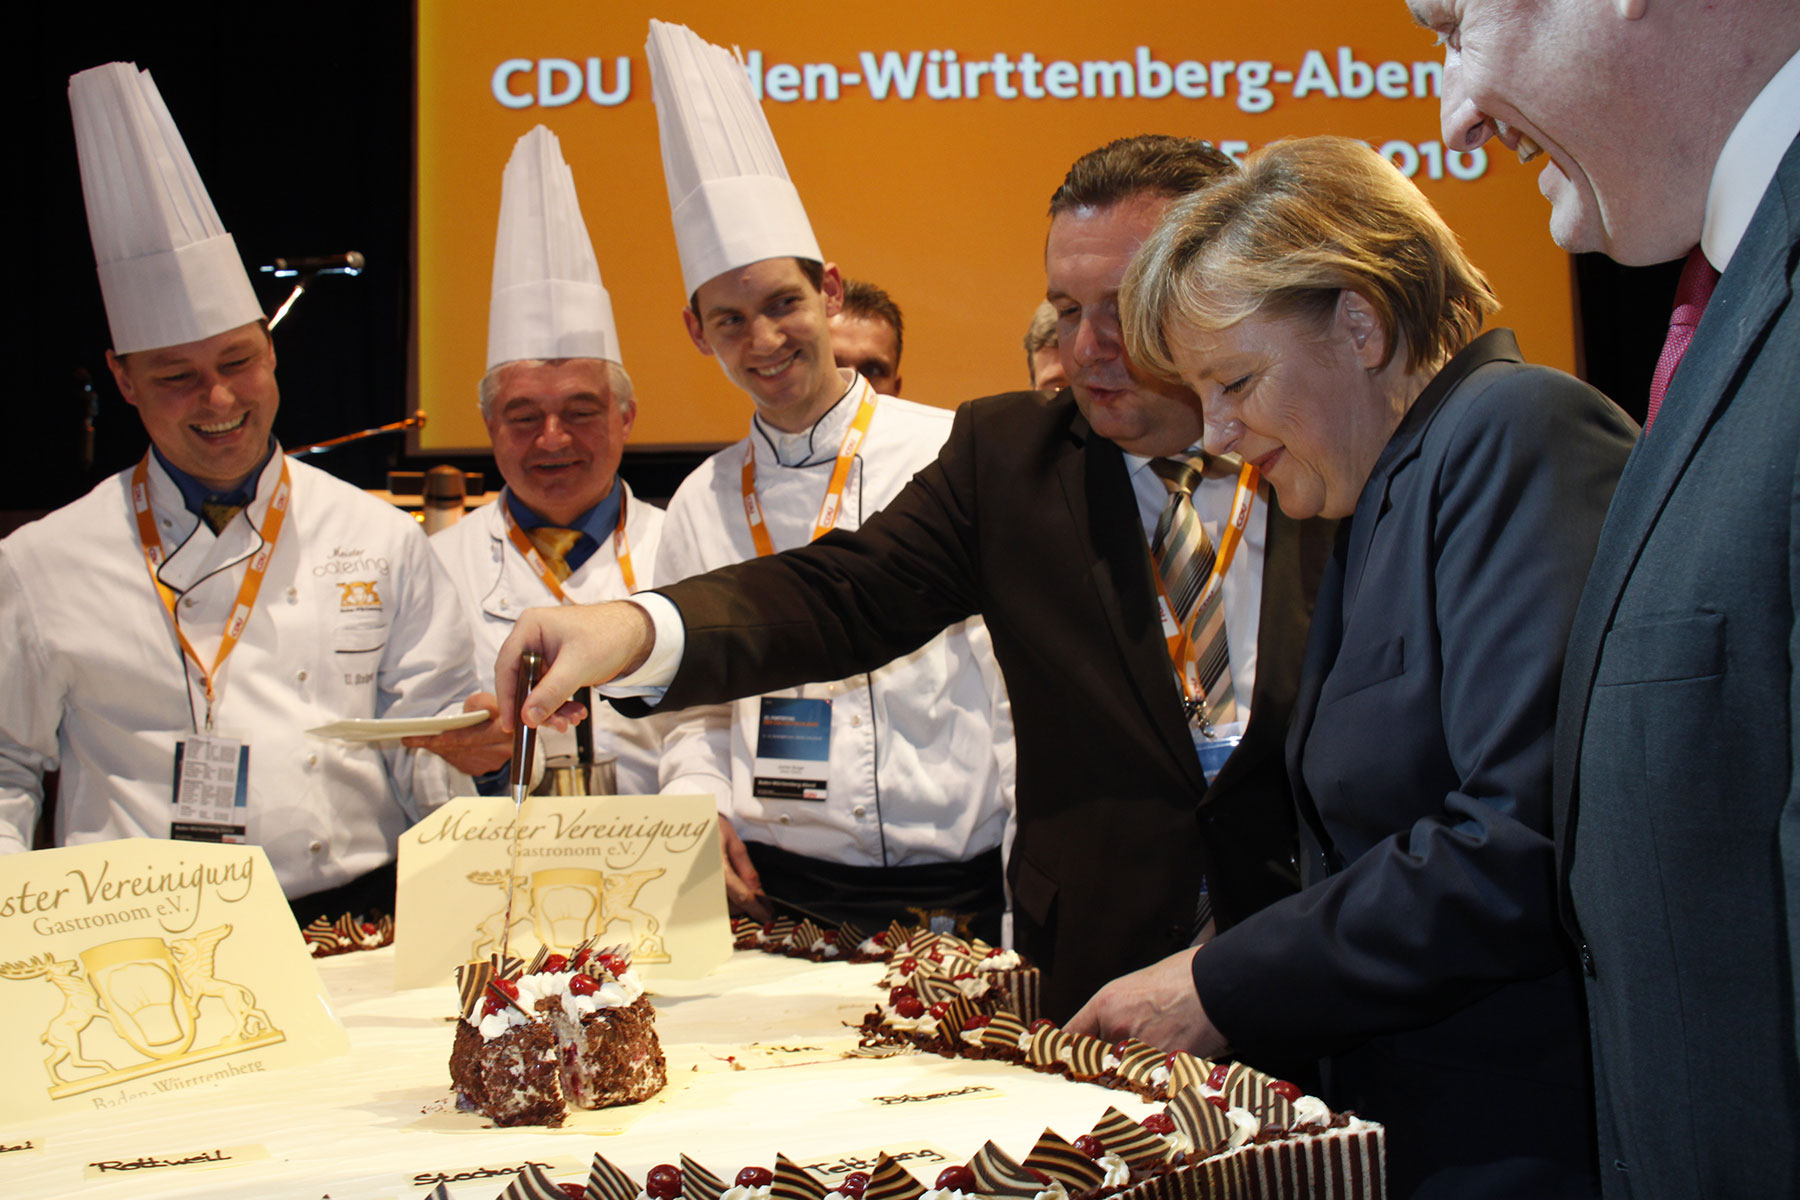 2010 Angela Merkel